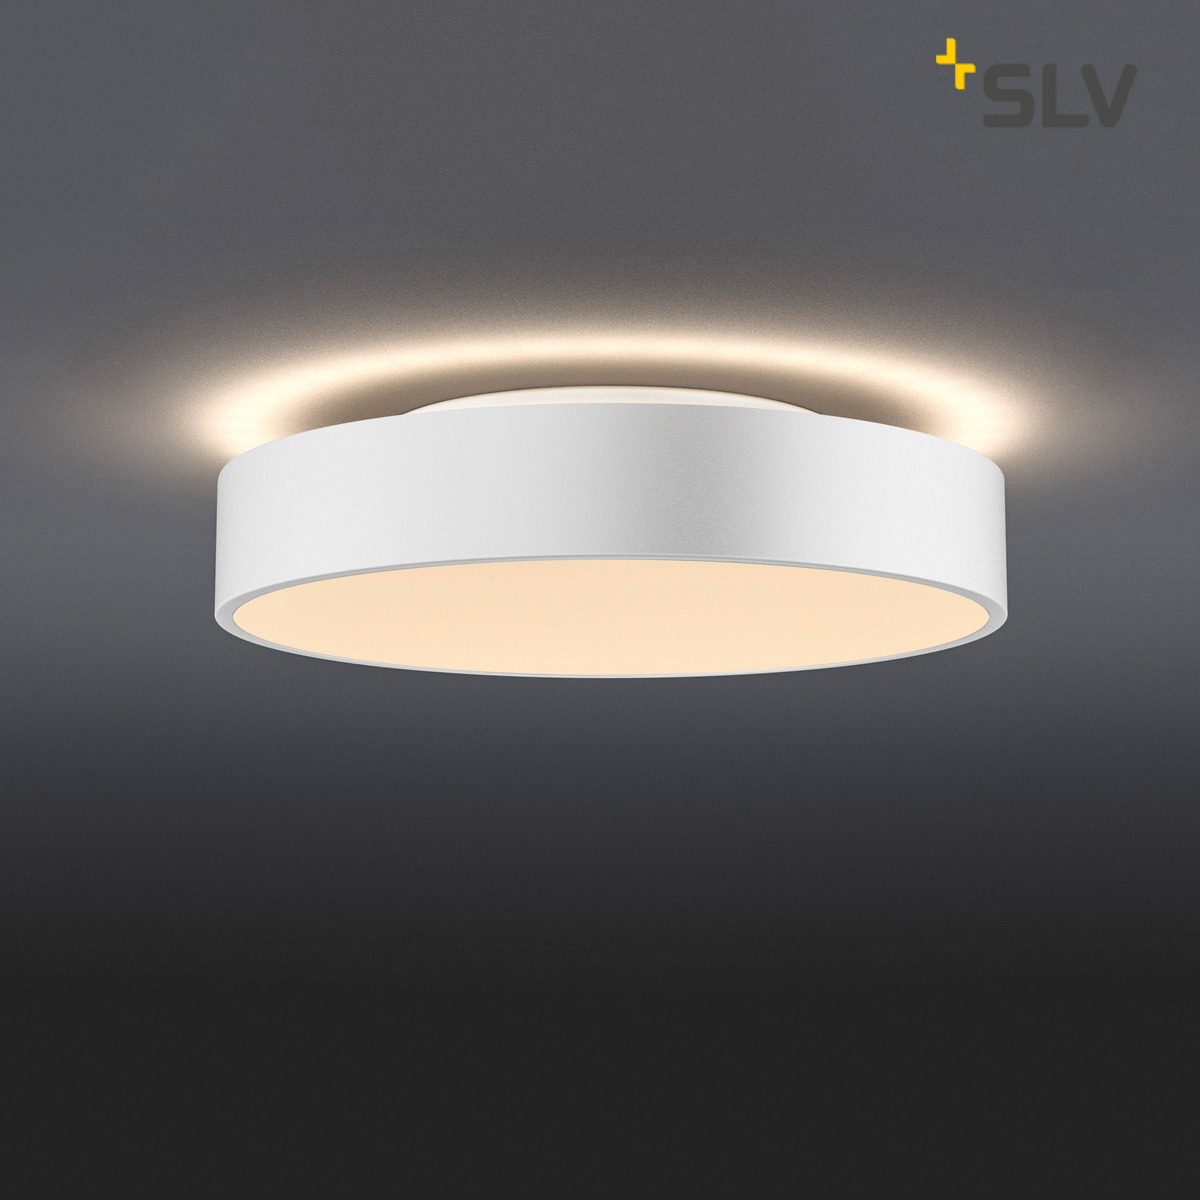 SLV Medo 40 CW Corona LED Wall and Ceiling Light white